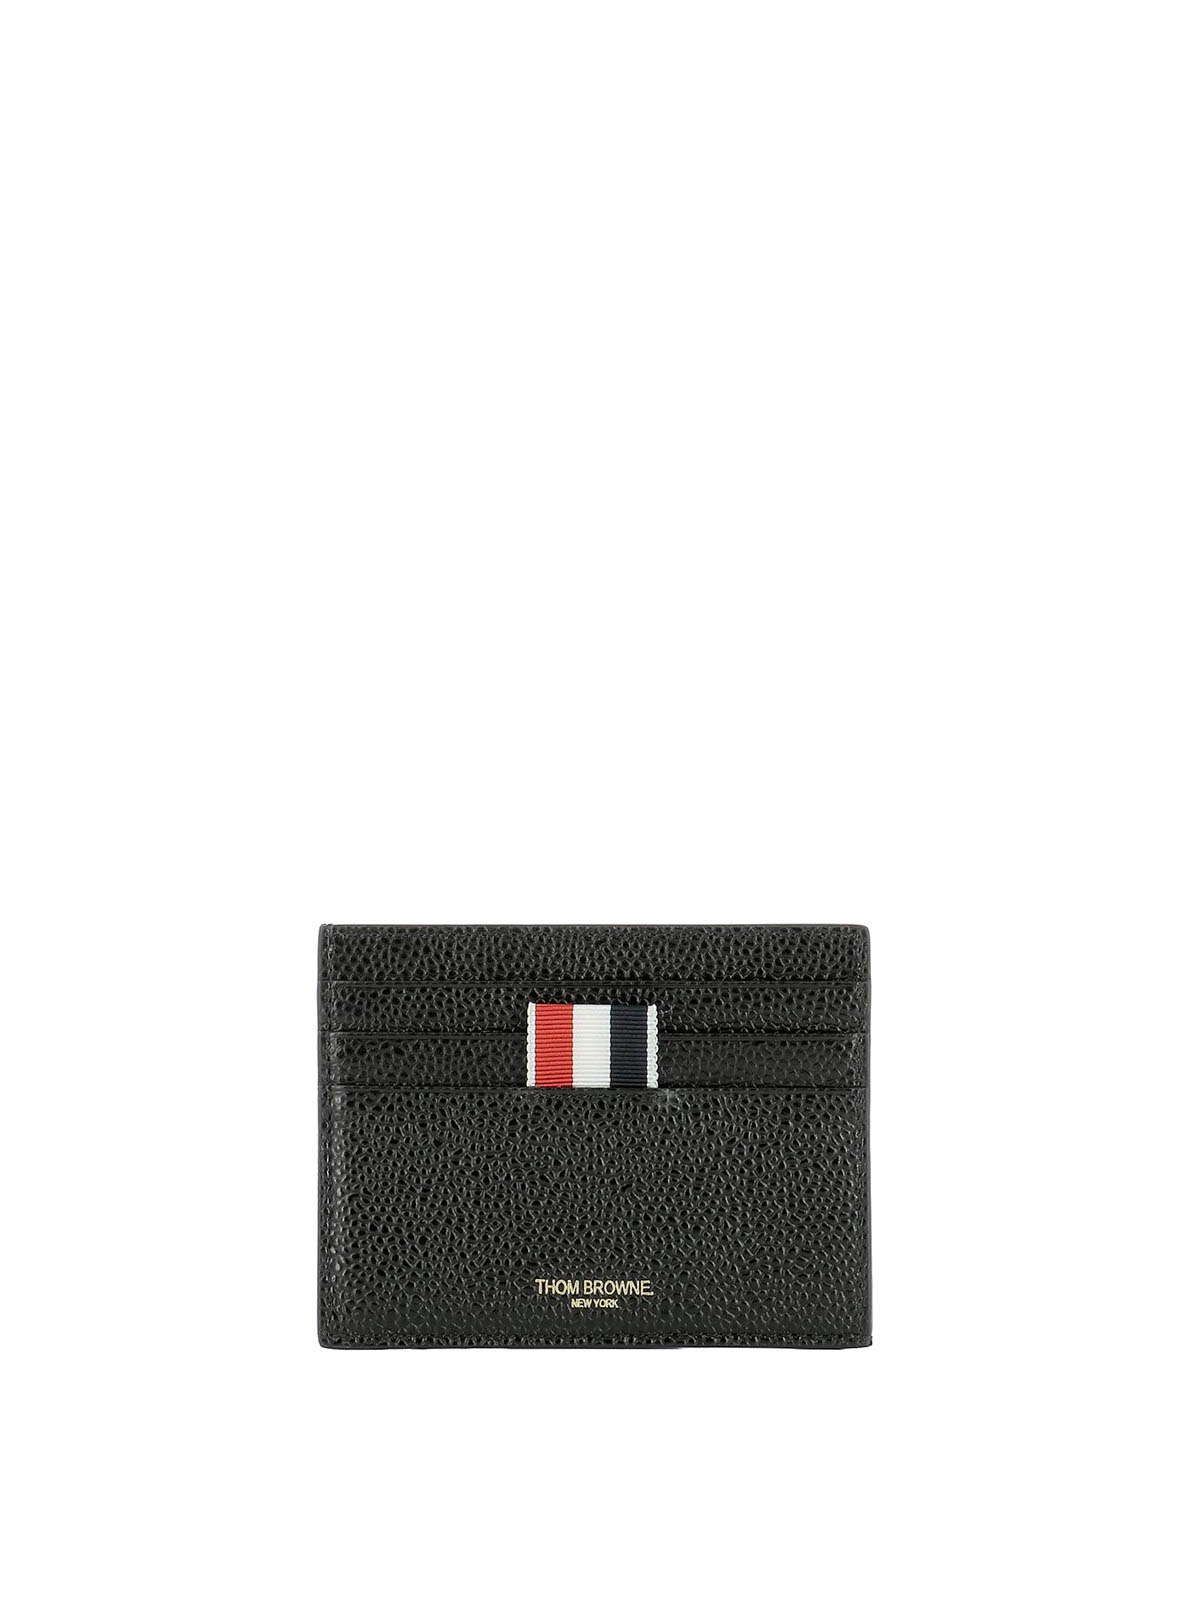 Thom Browne Black Textured Leather Card Holder